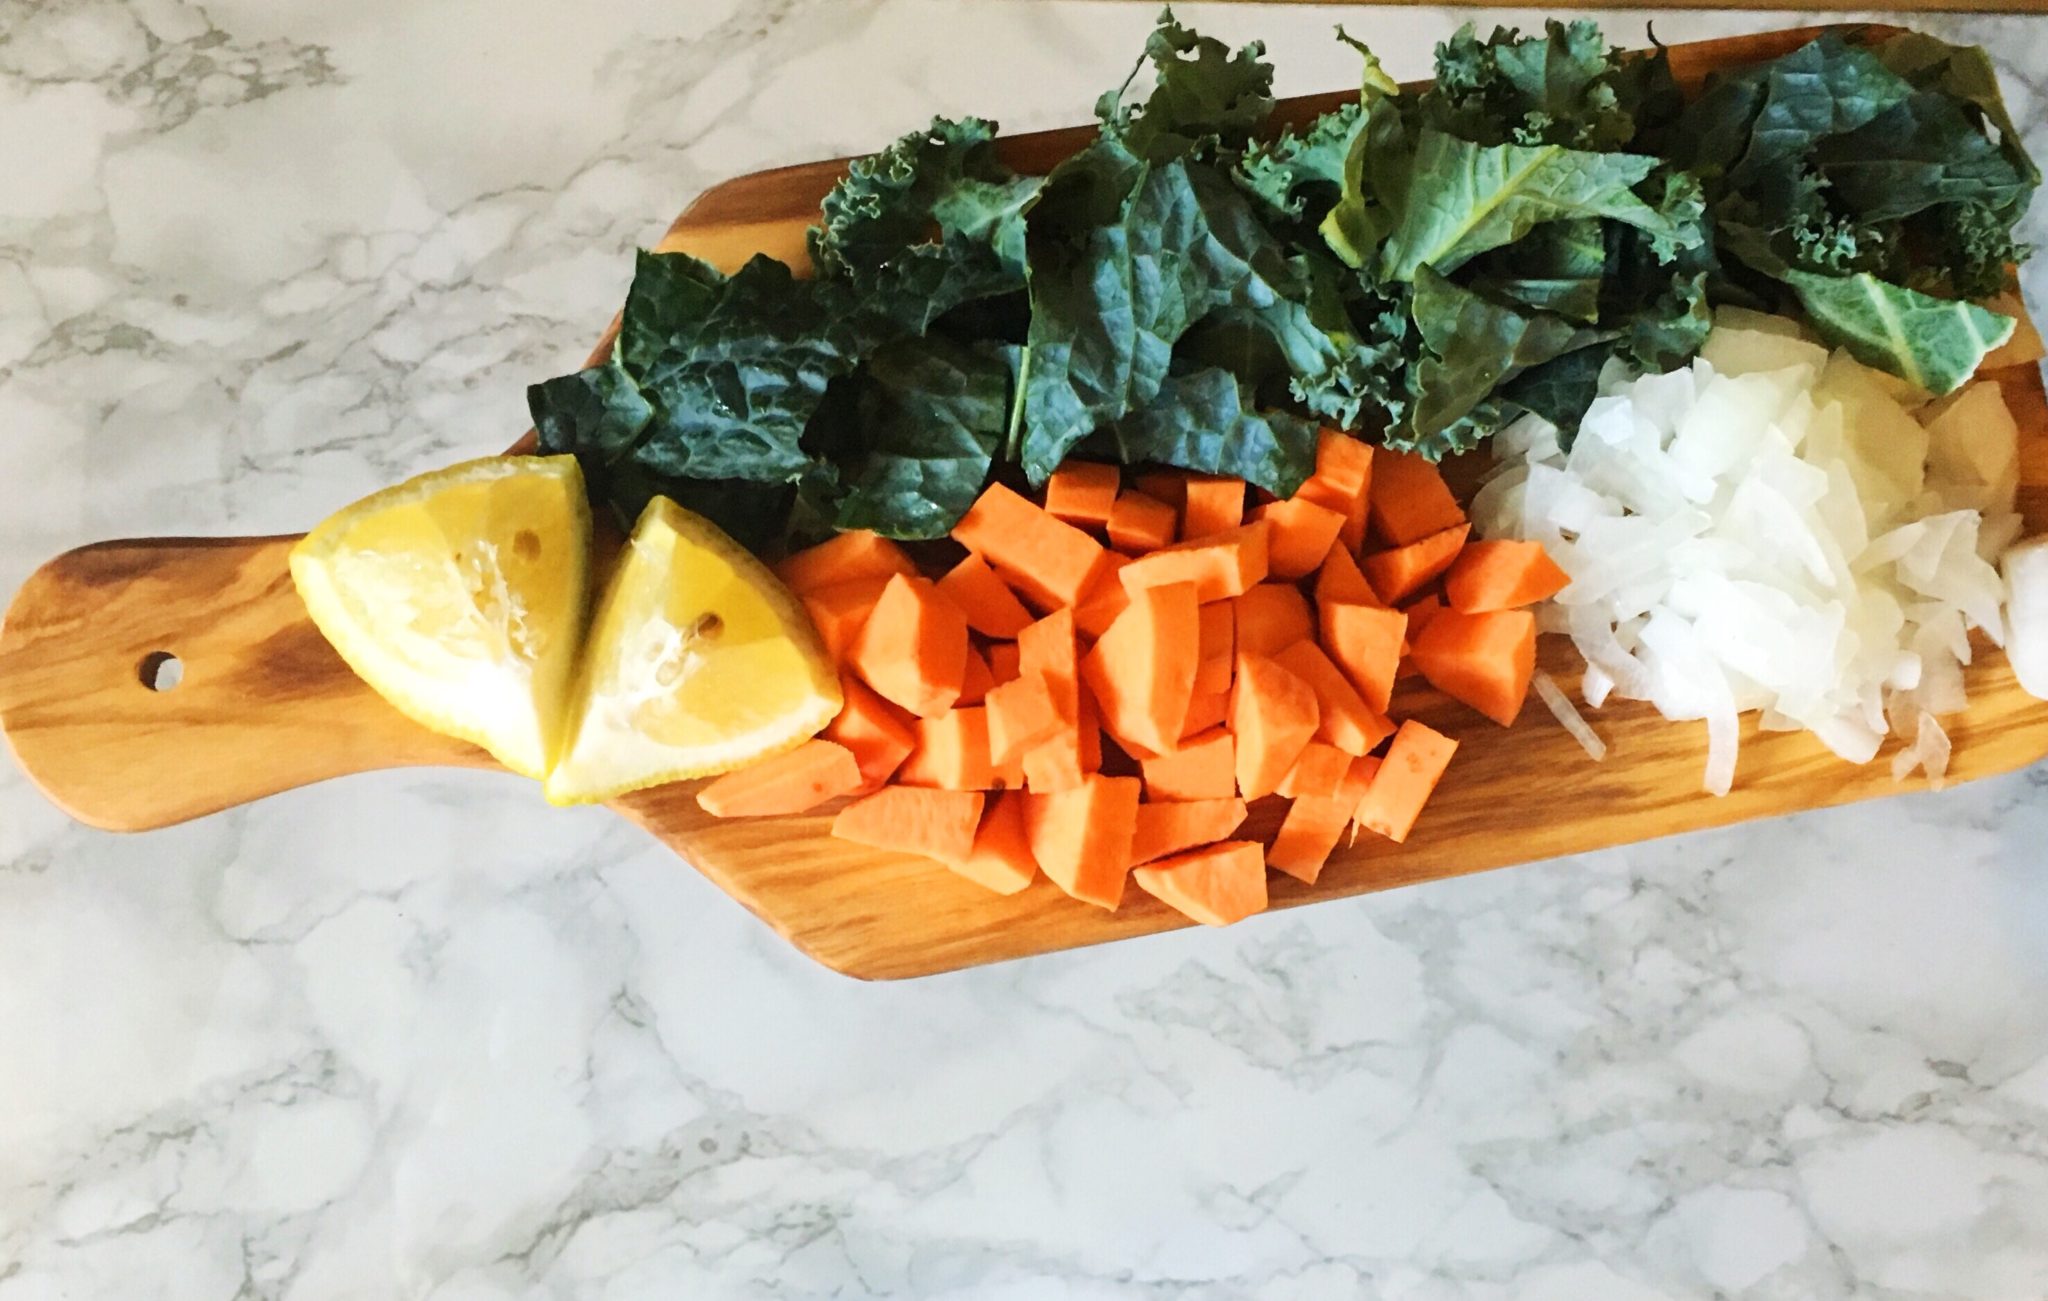 Cutting board with chopped sweet potato, kale, onion, and sliced lemon